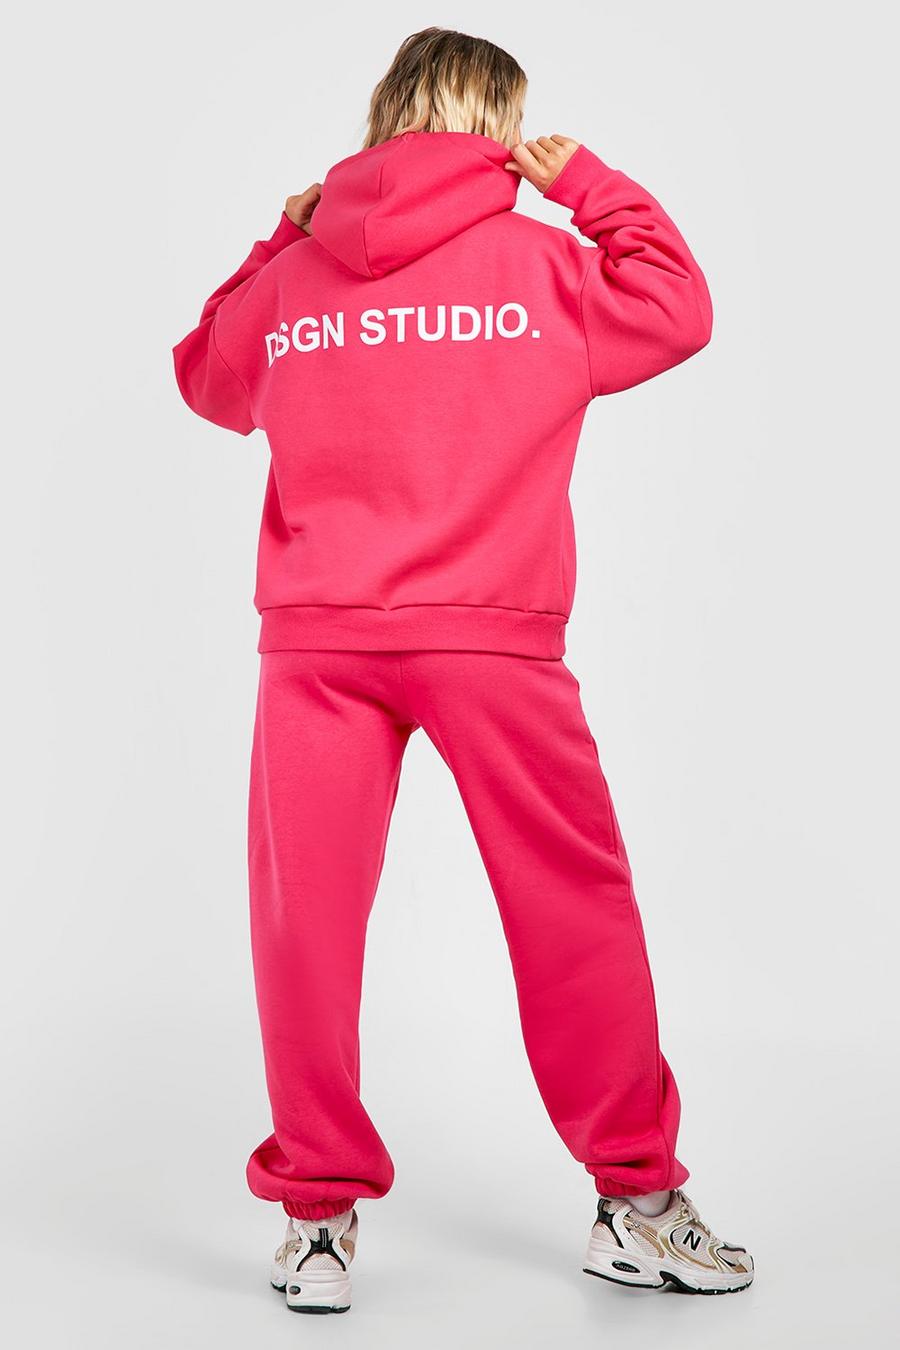 Chándal Dsgn Studio de tela con capucha y etiqueta, Hot pink image number 1